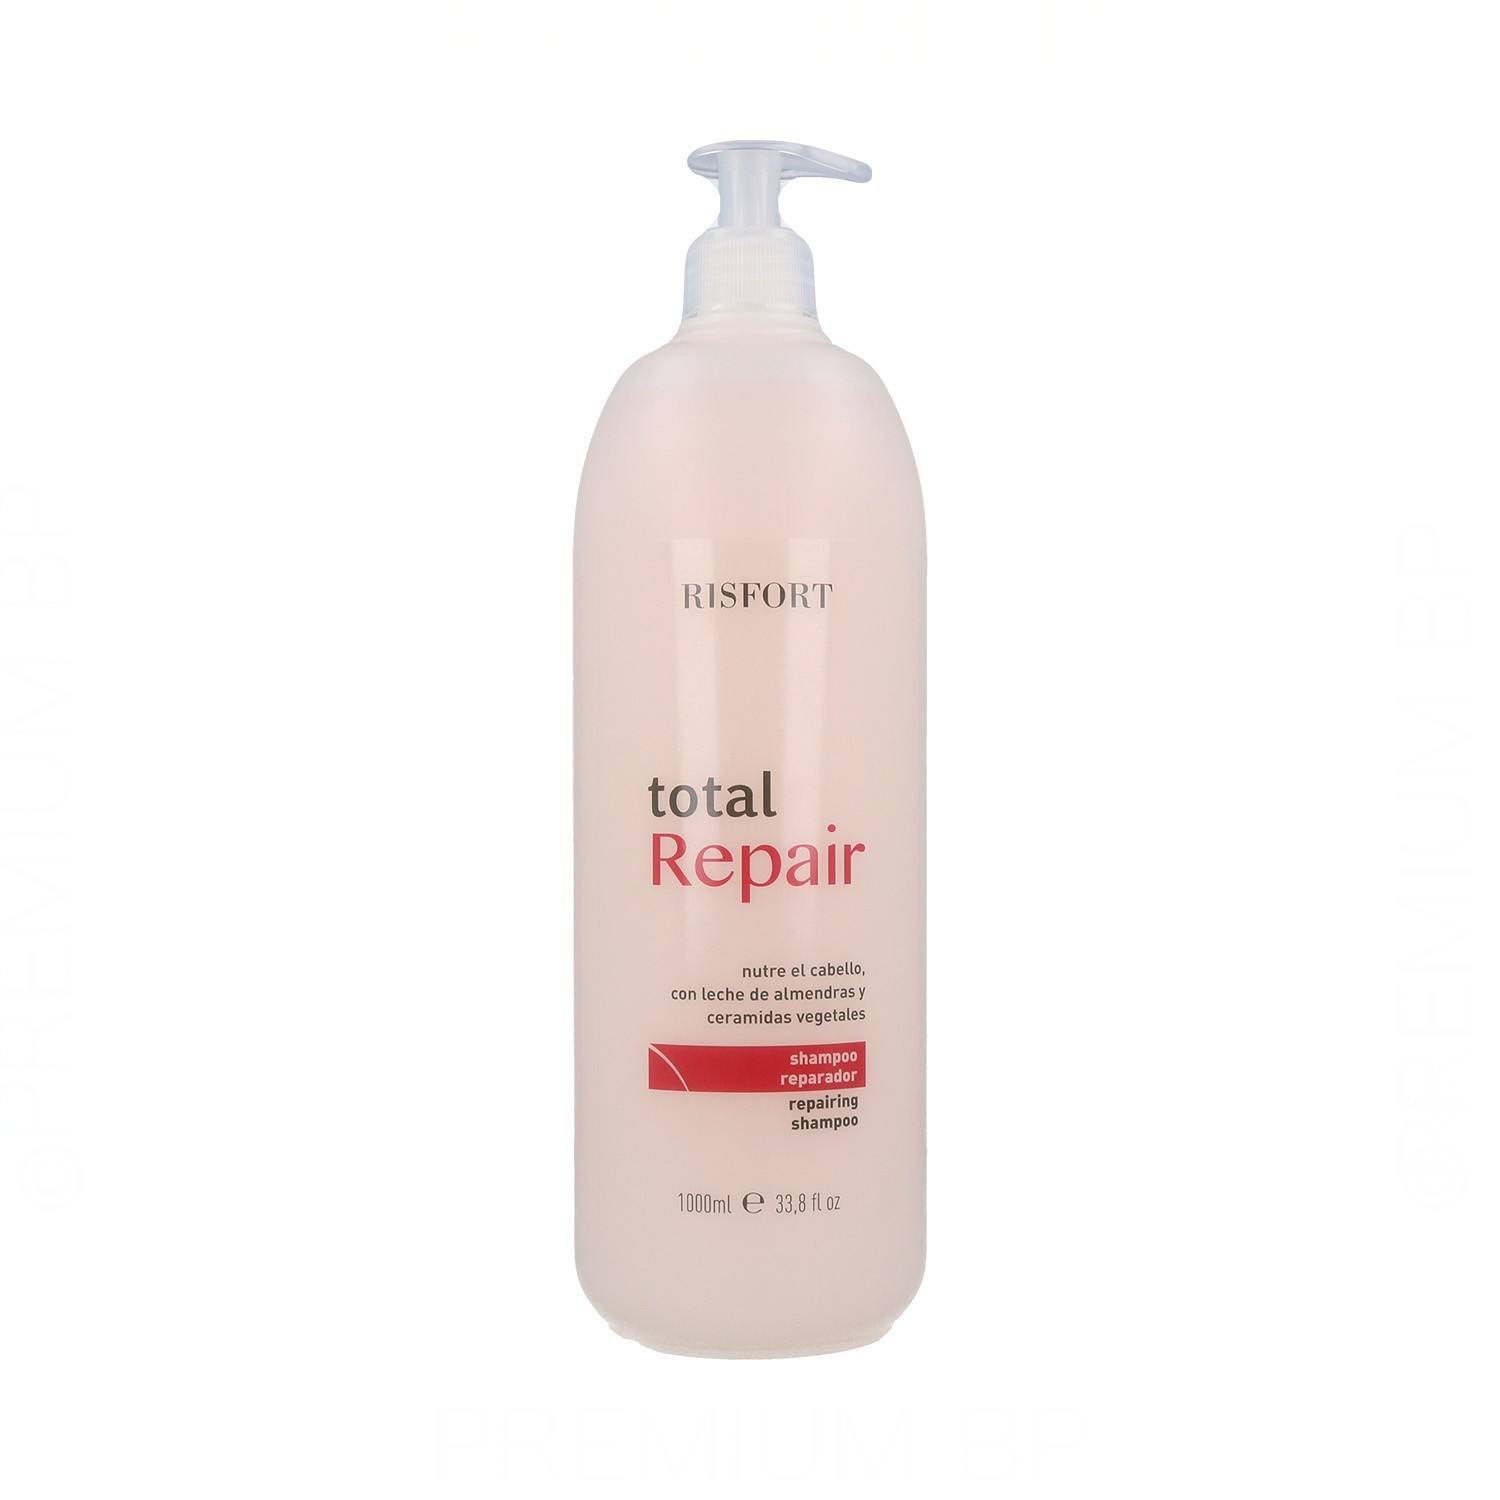 Risfort Total Repair Shampoo 1000 ml